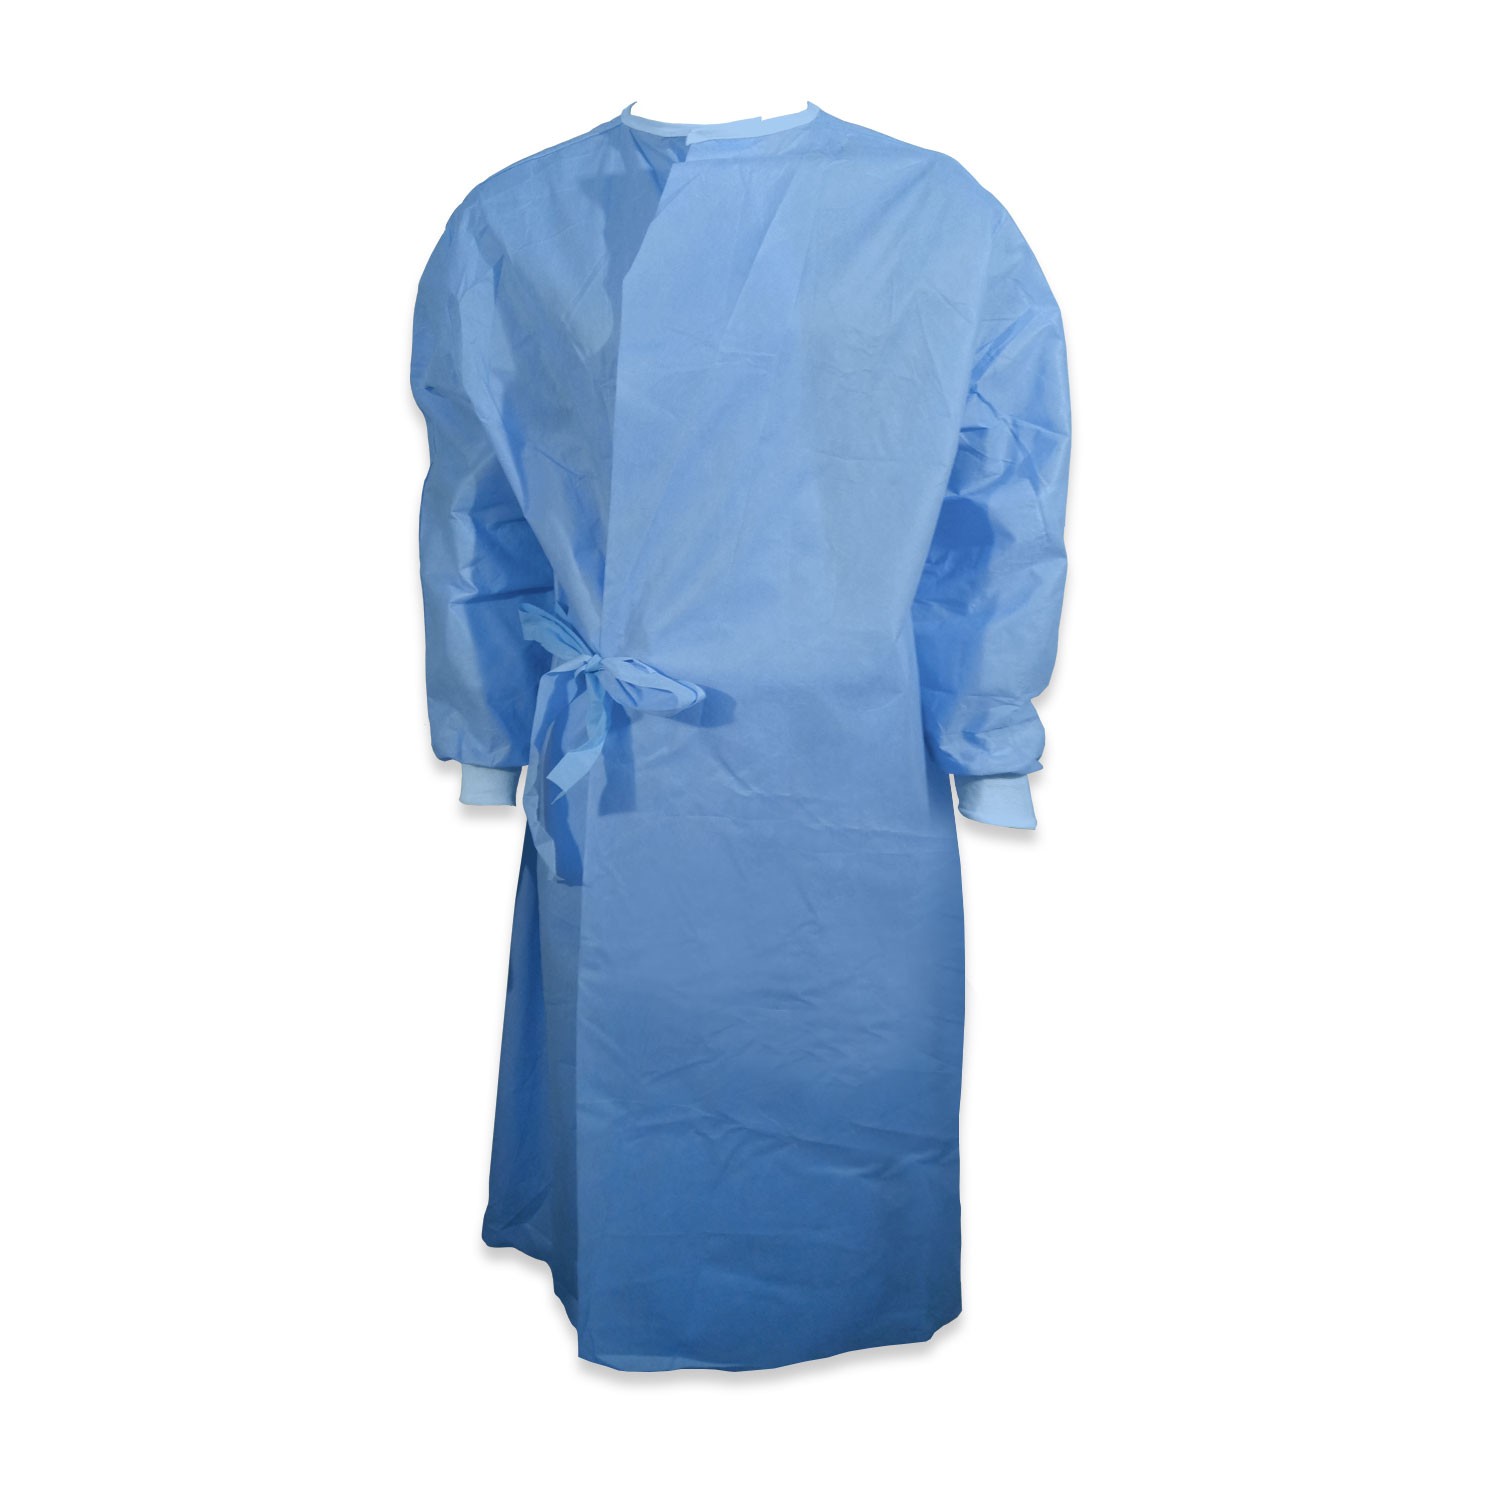 Robe de Chirurgien Renforcée Manches Longues Cuff SMS Bleu